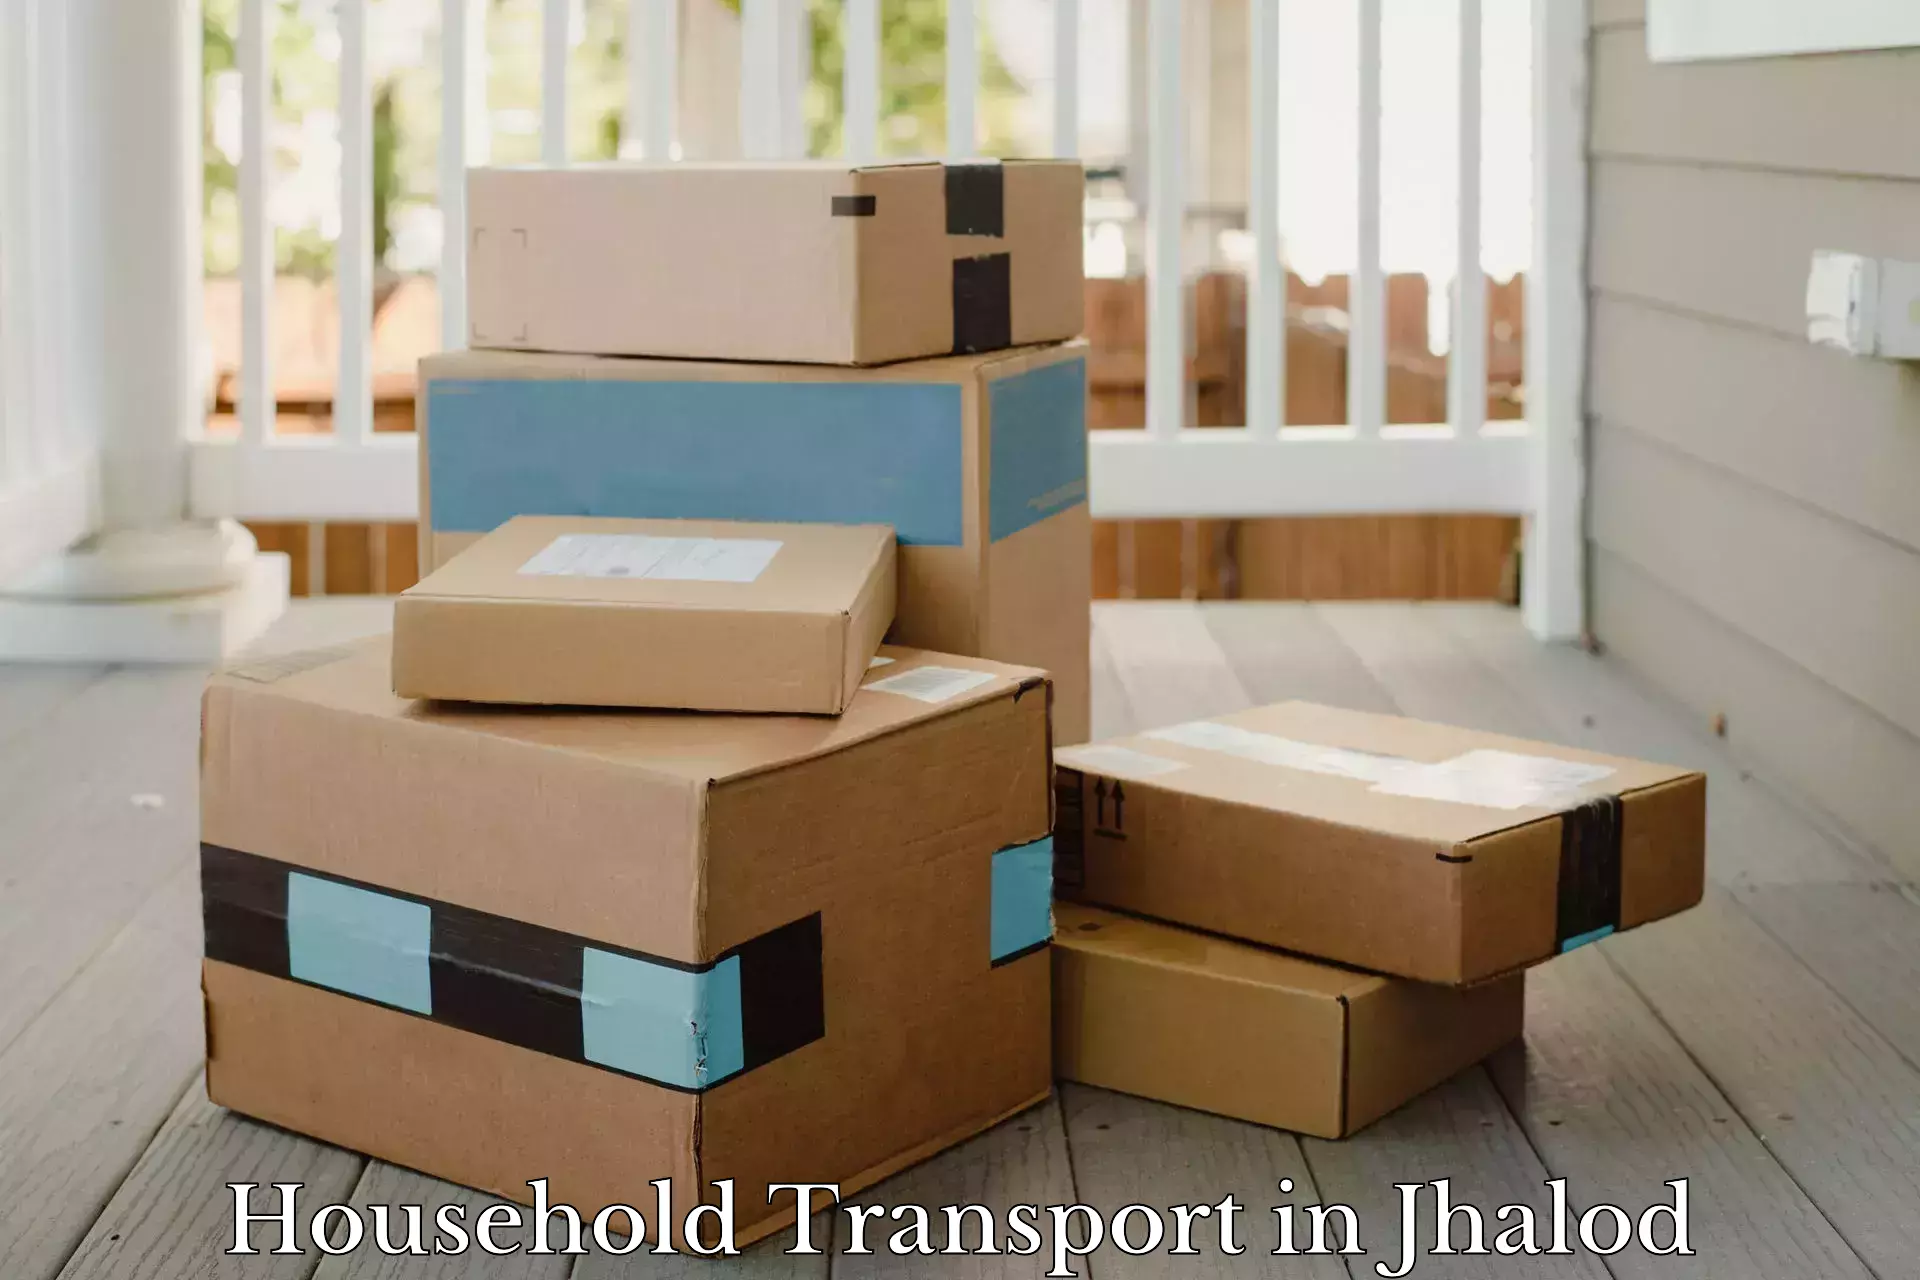 Household goods transport service in Jhalod